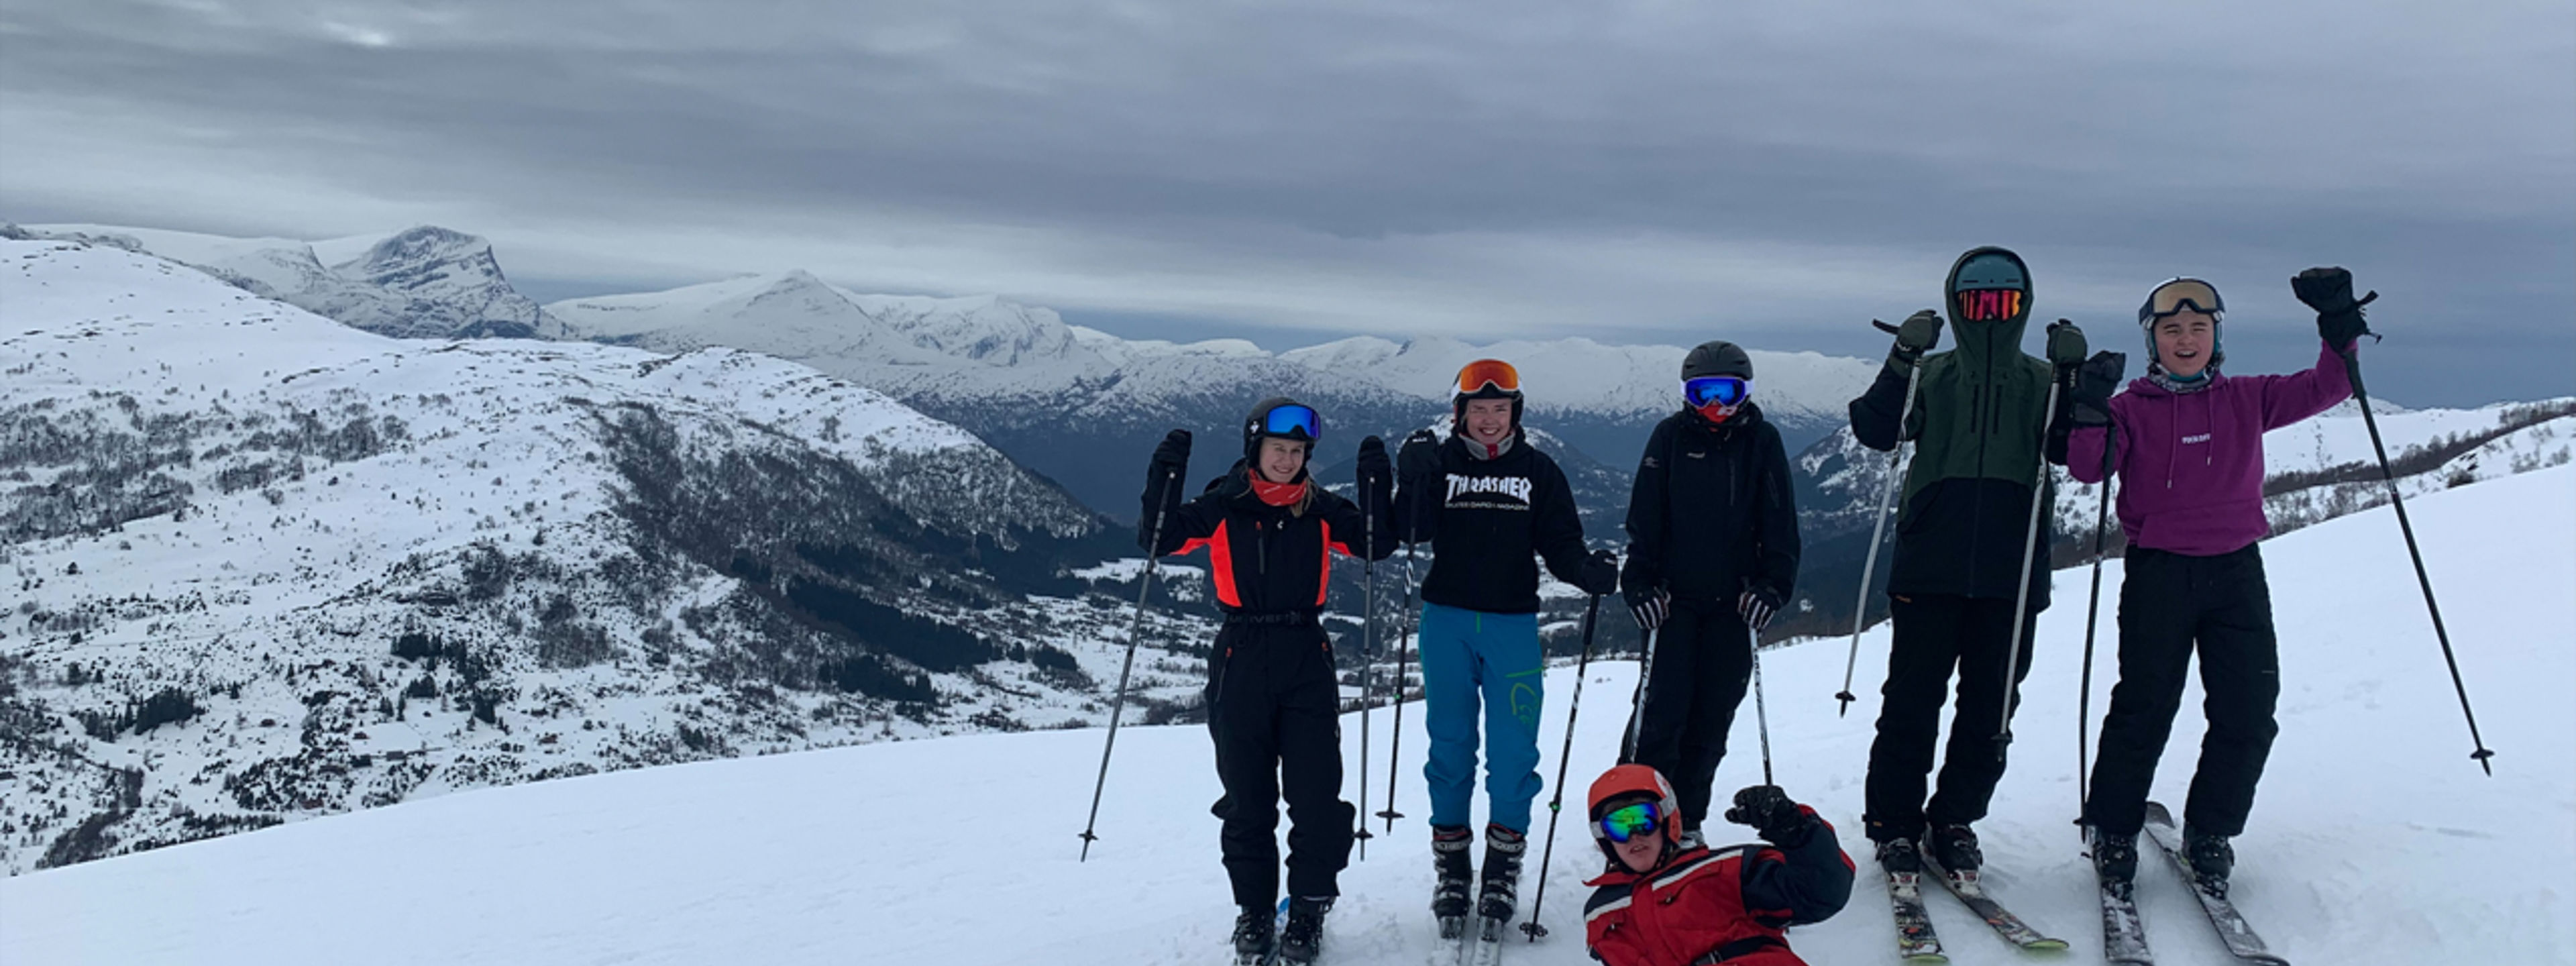 5 elevar på slalom og ein som ligg på bakken med snowboard. 